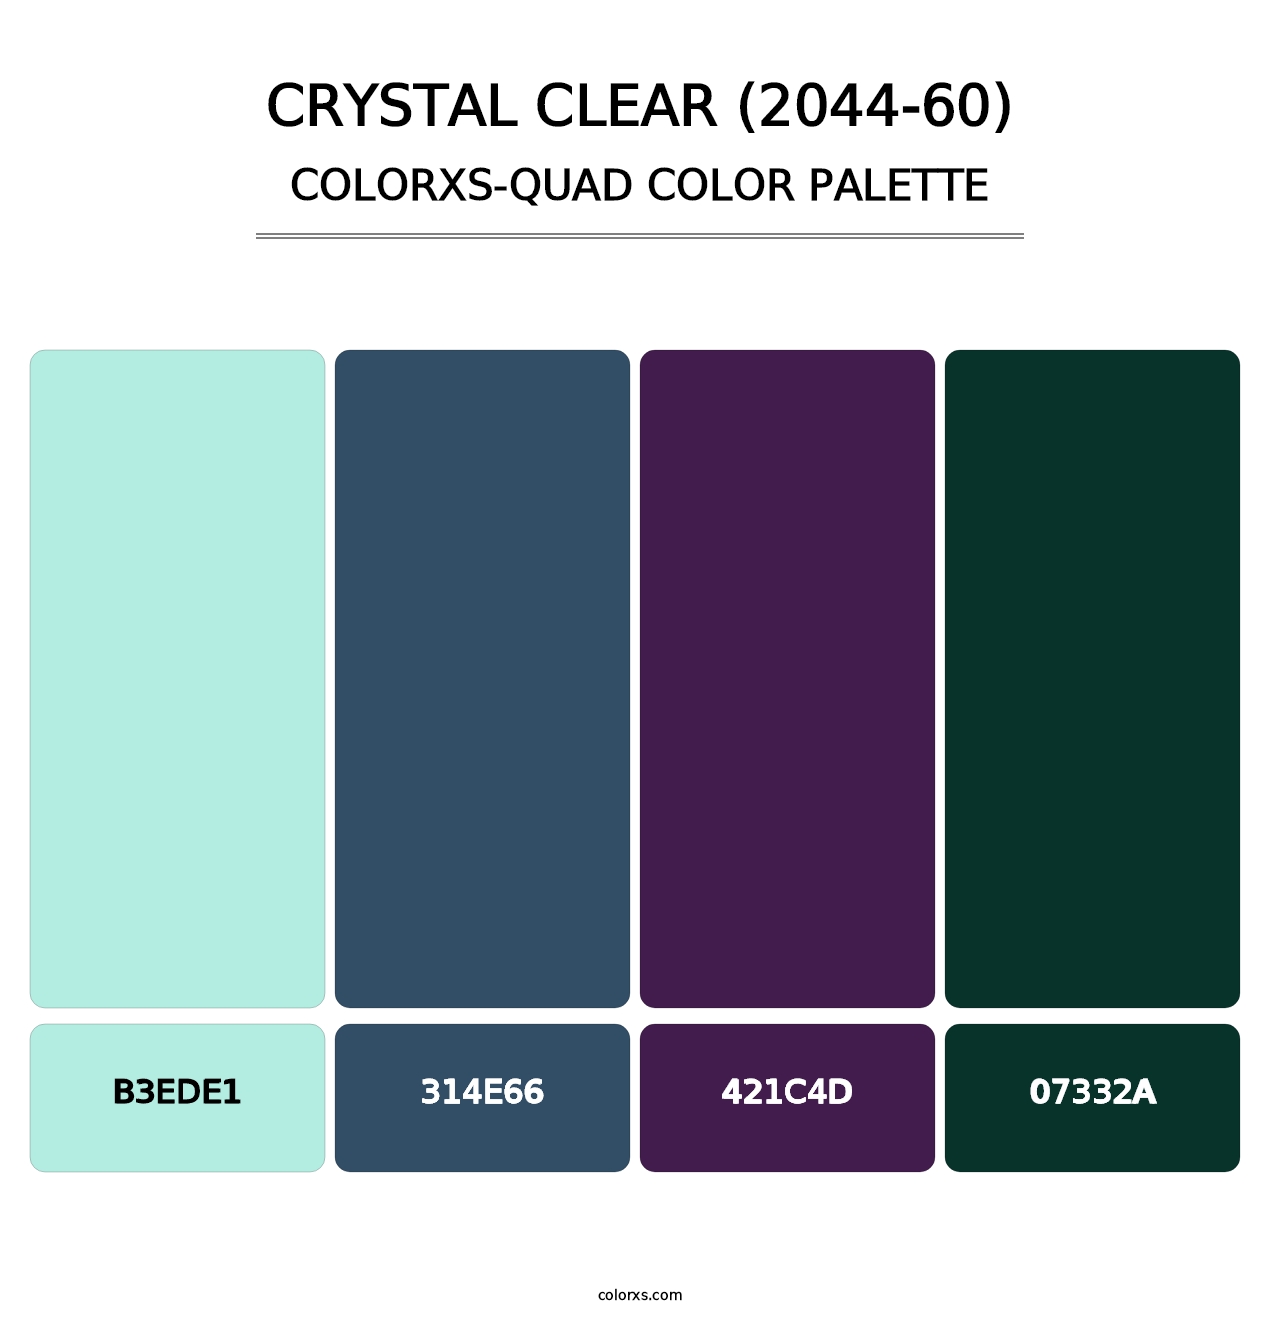 Crystal Clear (2044-60) - Colorxs Quad Palette